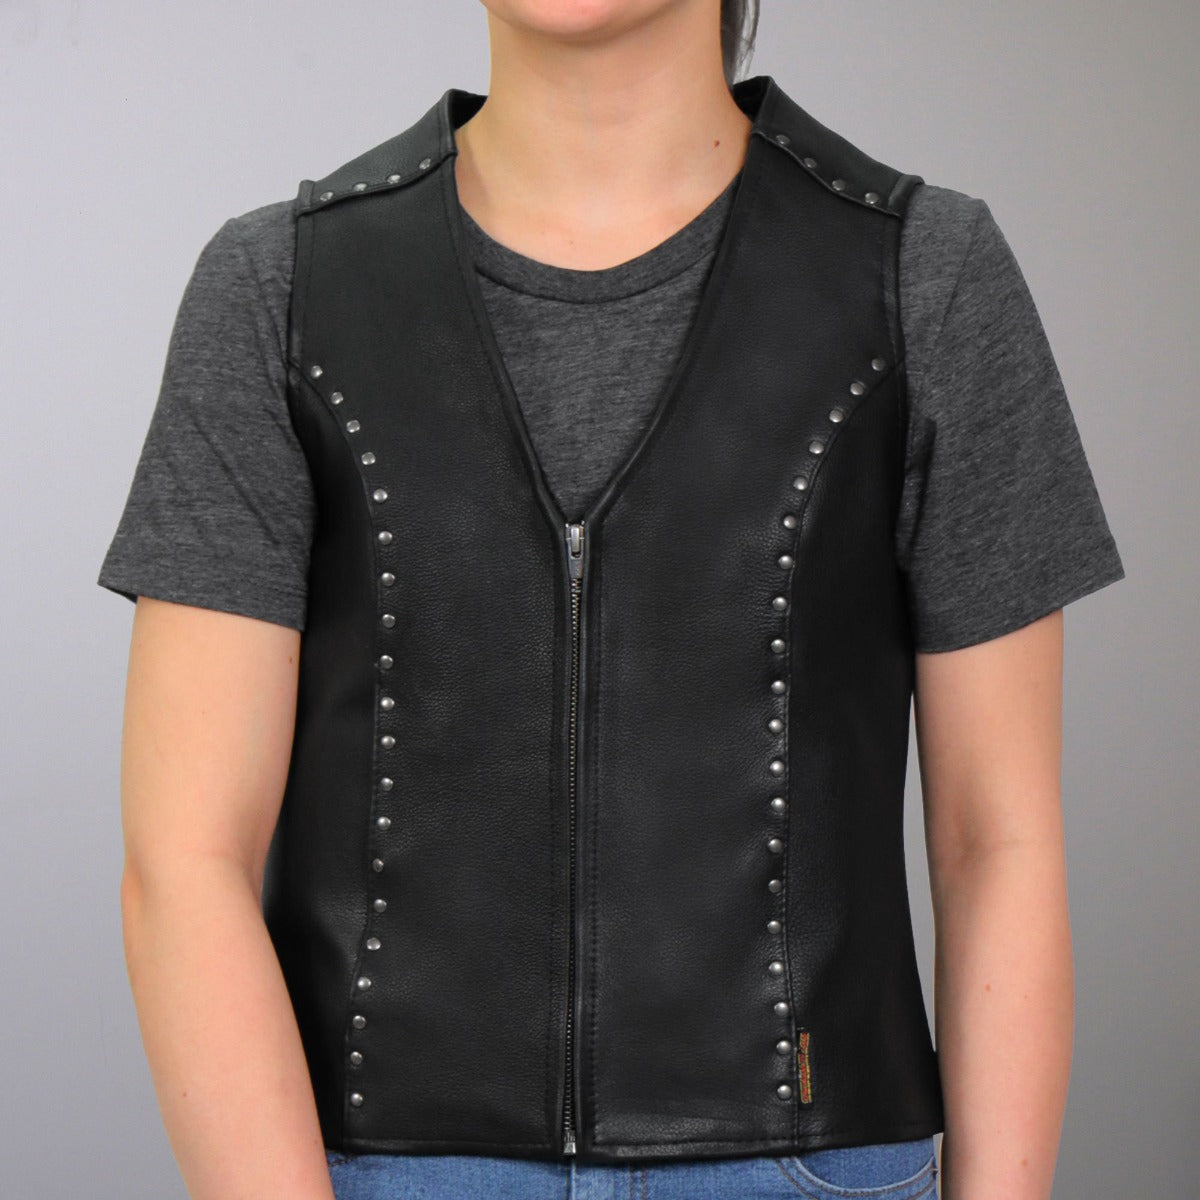 Hot Leathers Women's Leather Vest V-Neck